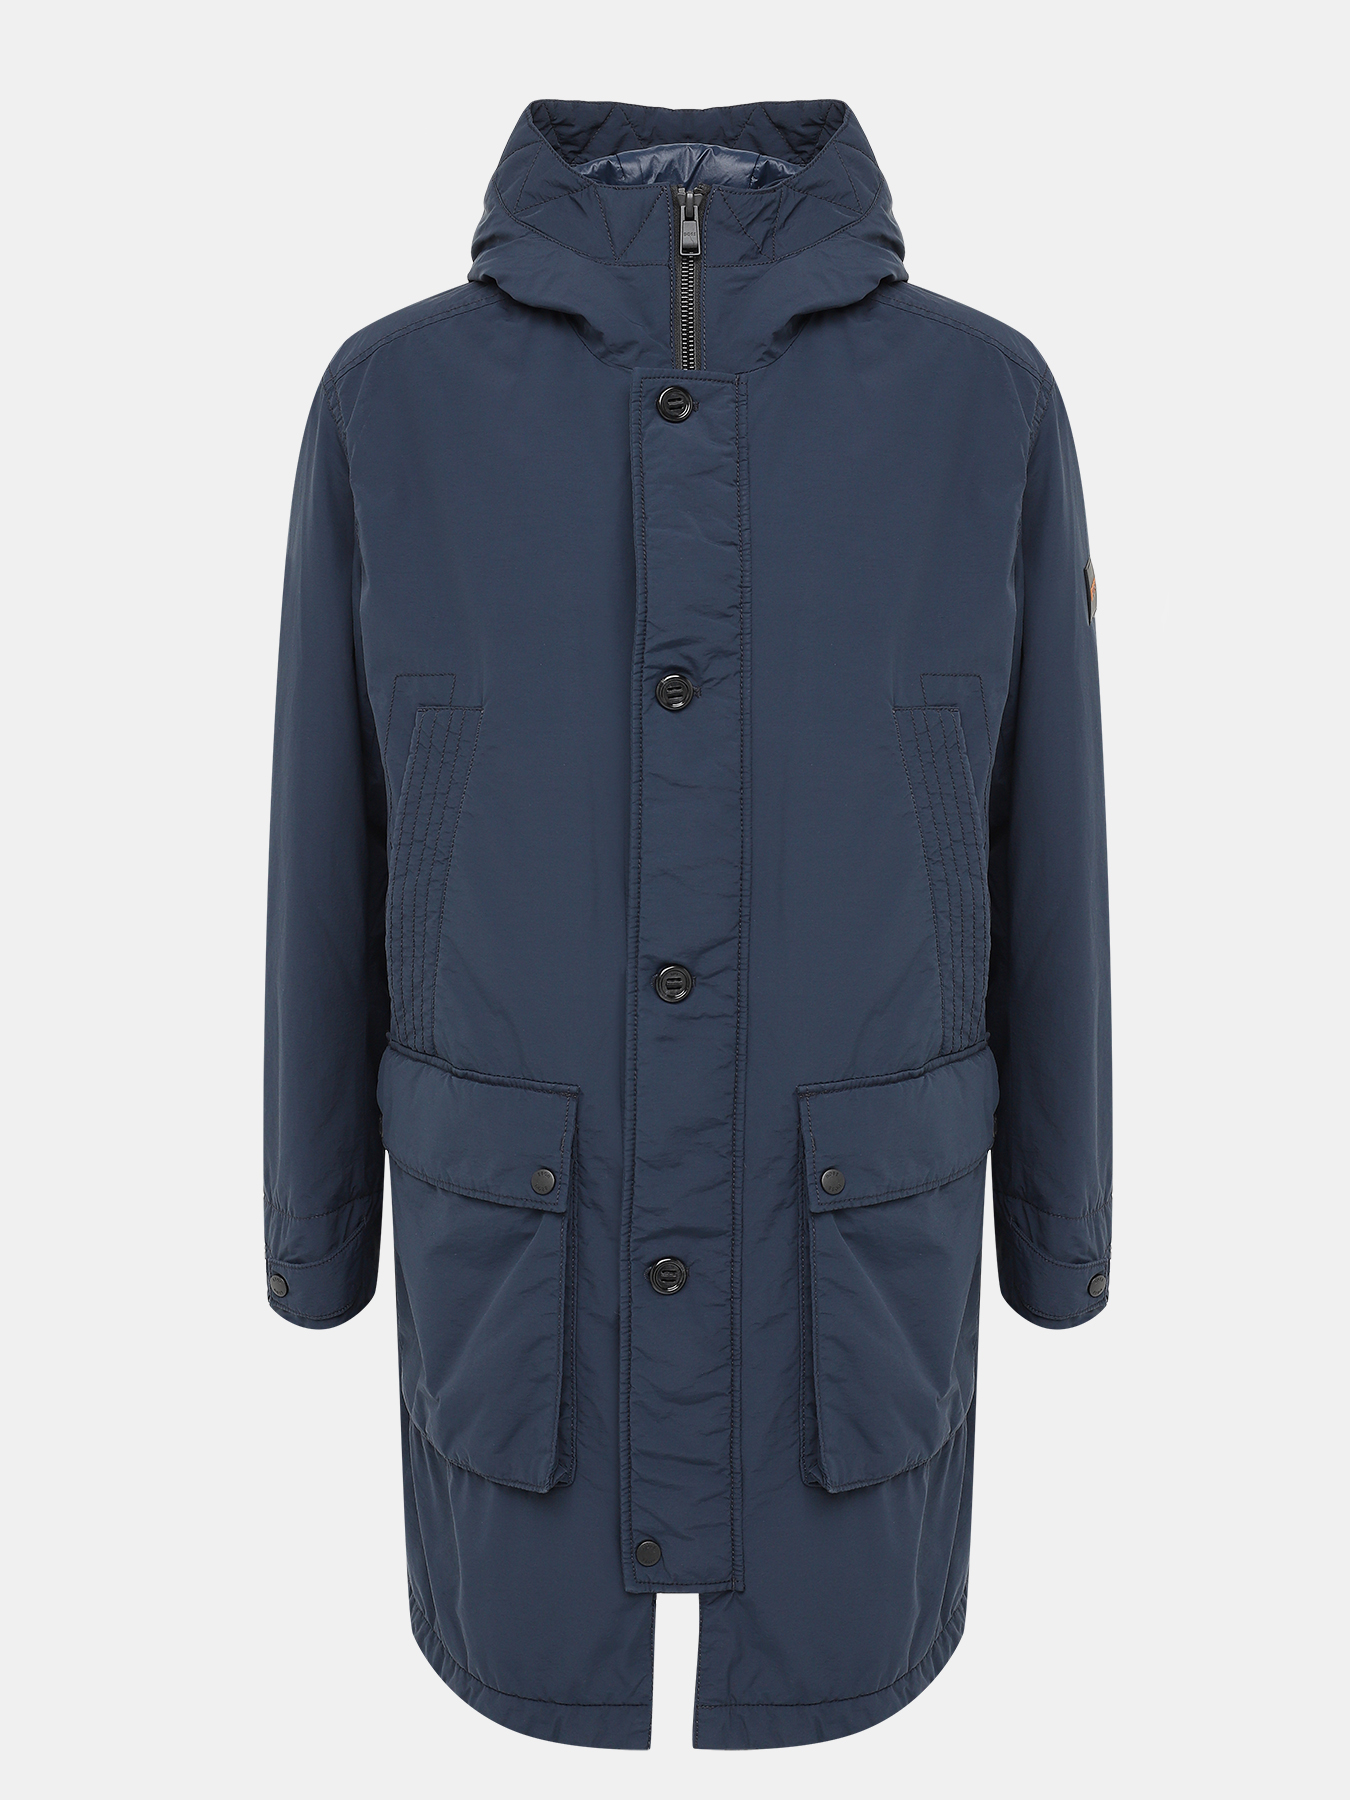 Удлиненная куртка Olgara BOSS 437906-026, цвет темно-синий, размер 50 - фото 1